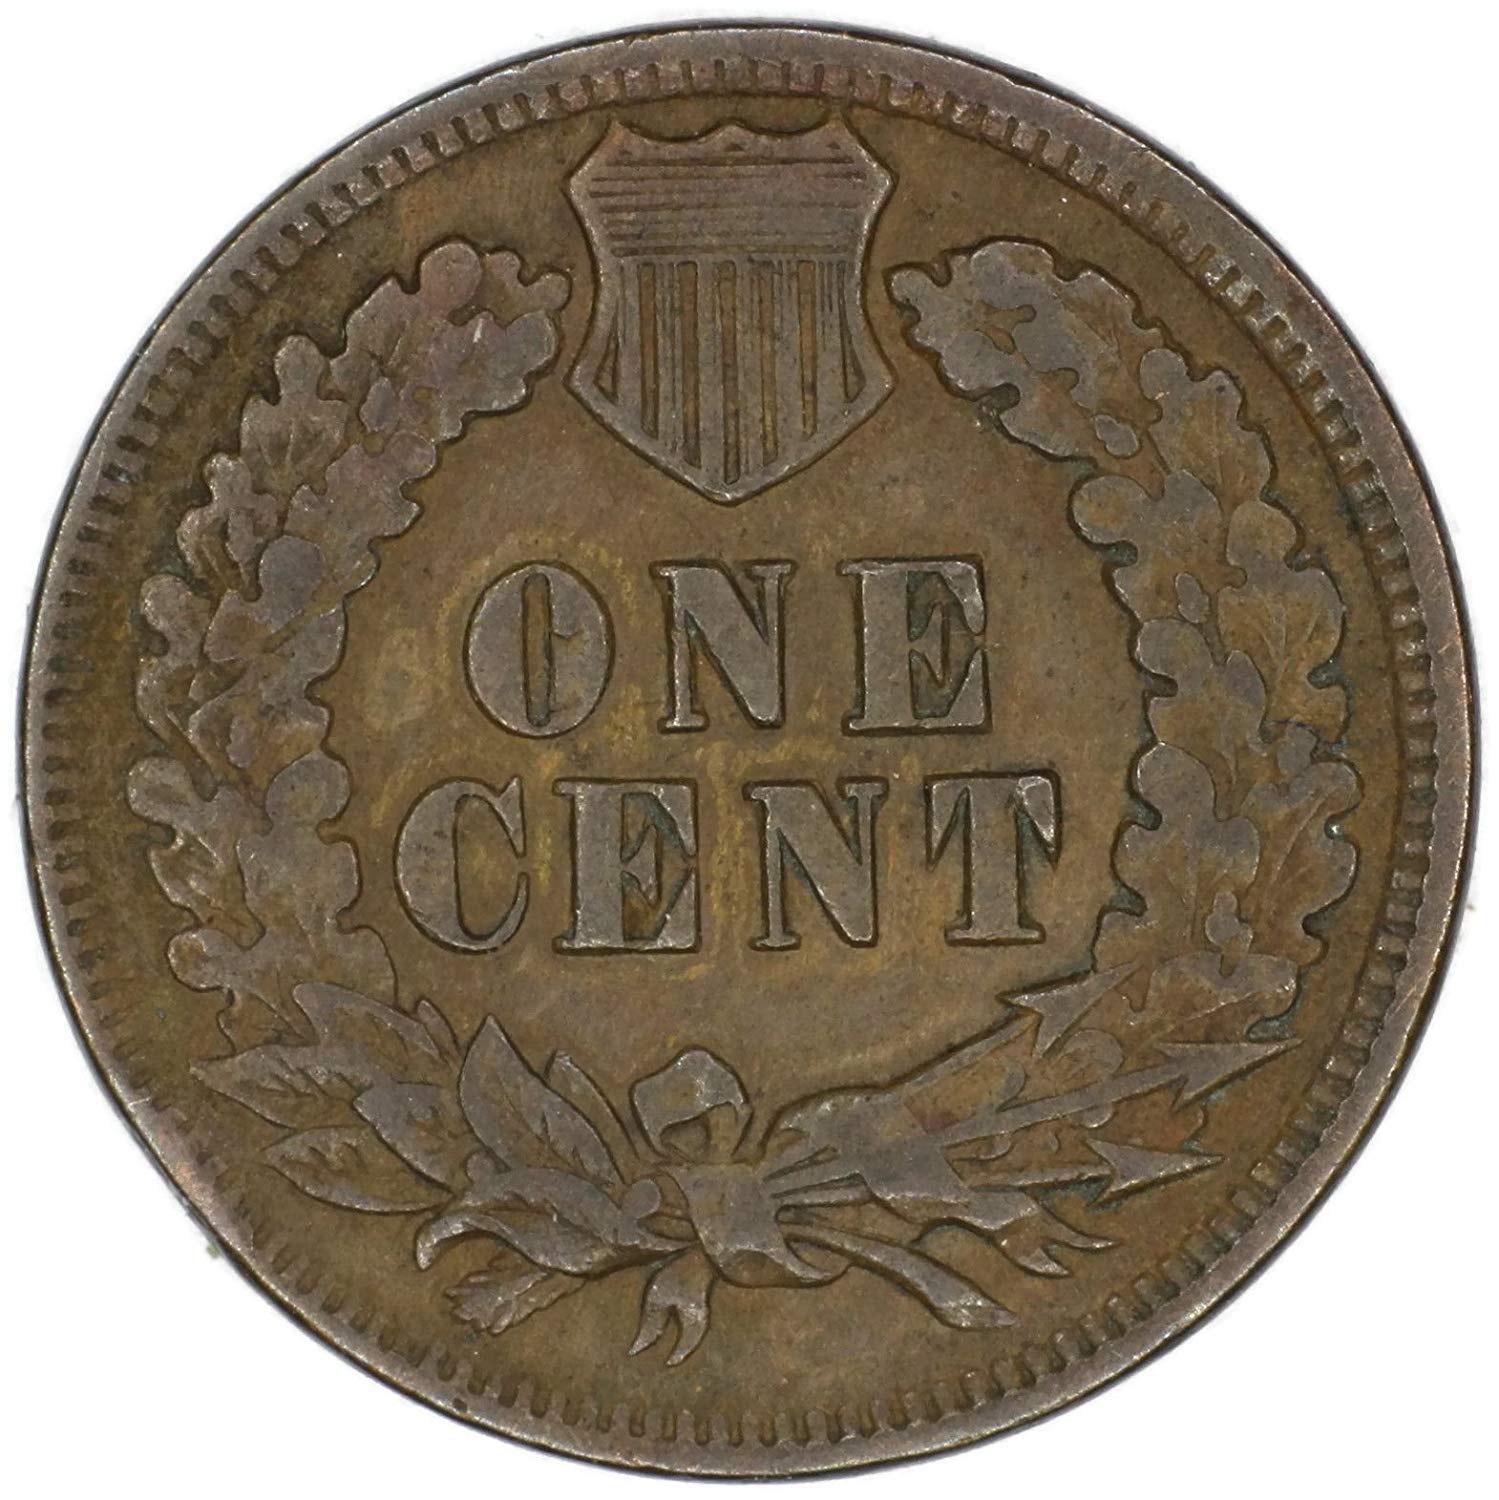 Amazon.com: 1900 Indian Head Penny (Coin): Collectible Coins